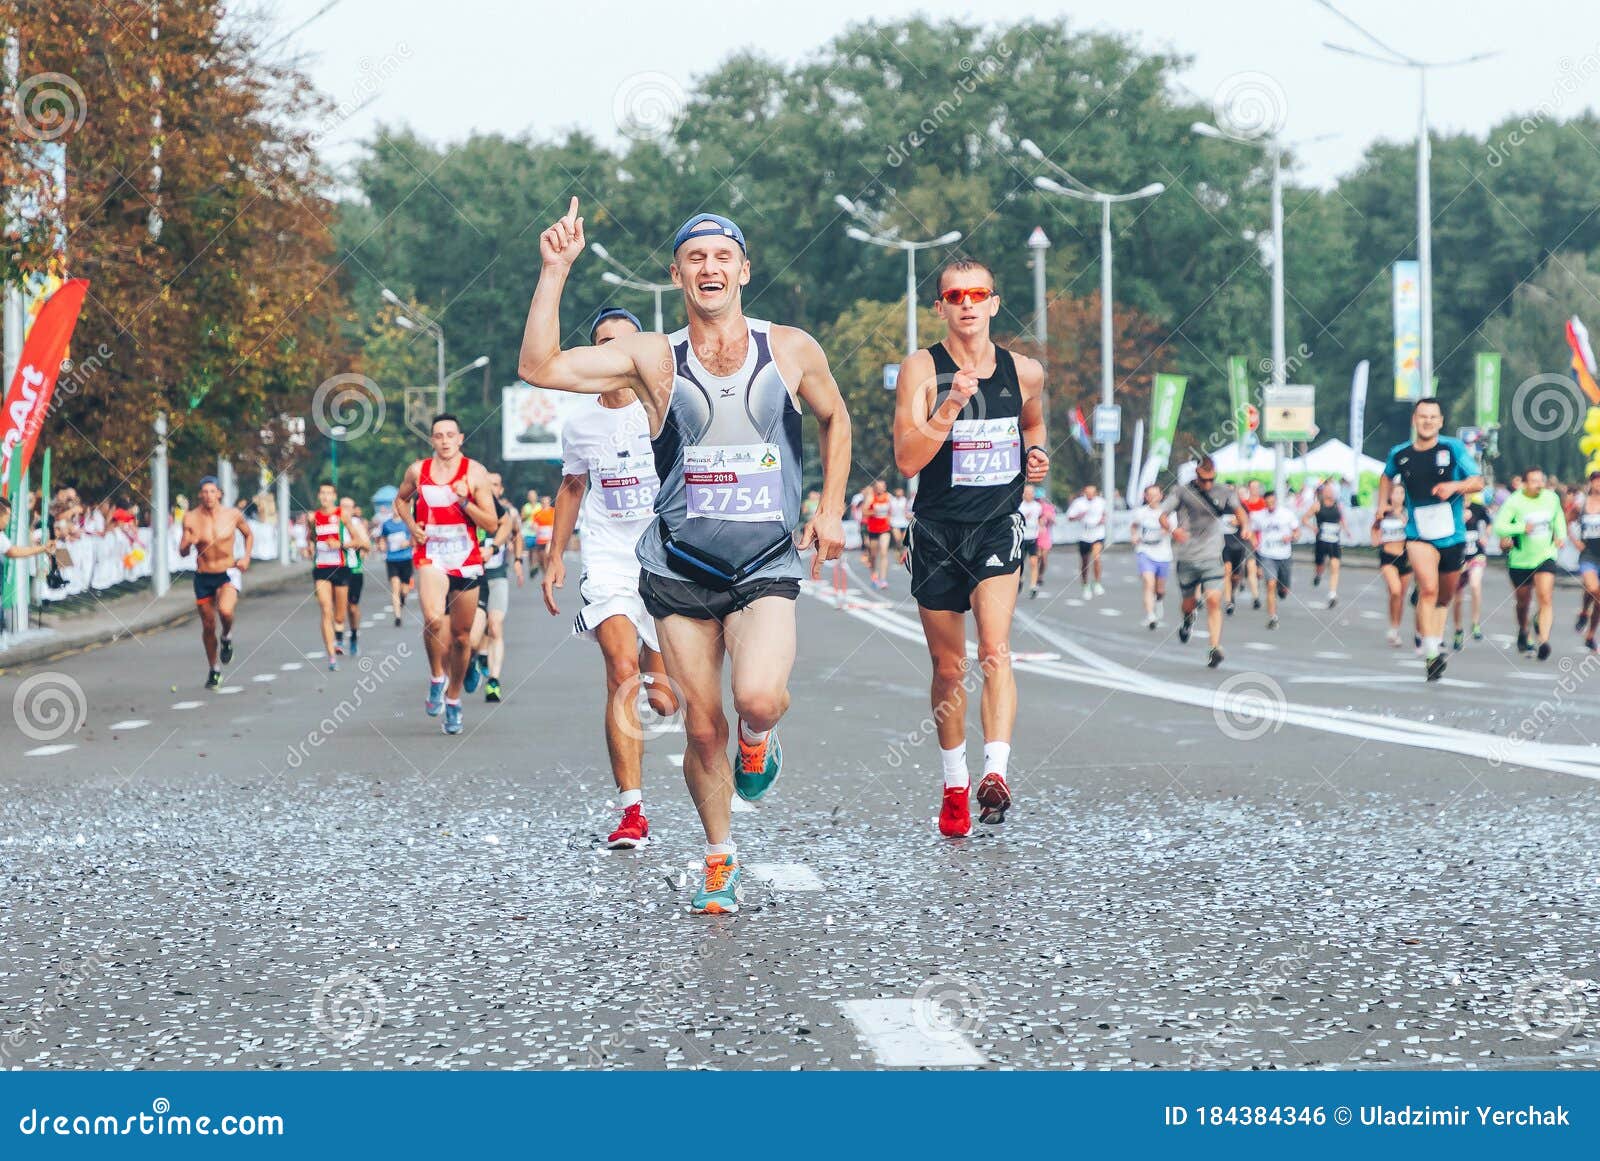 Half Marathon Minsk 2018 Running In The City Editorial Photo Image Of Active Line 184384346